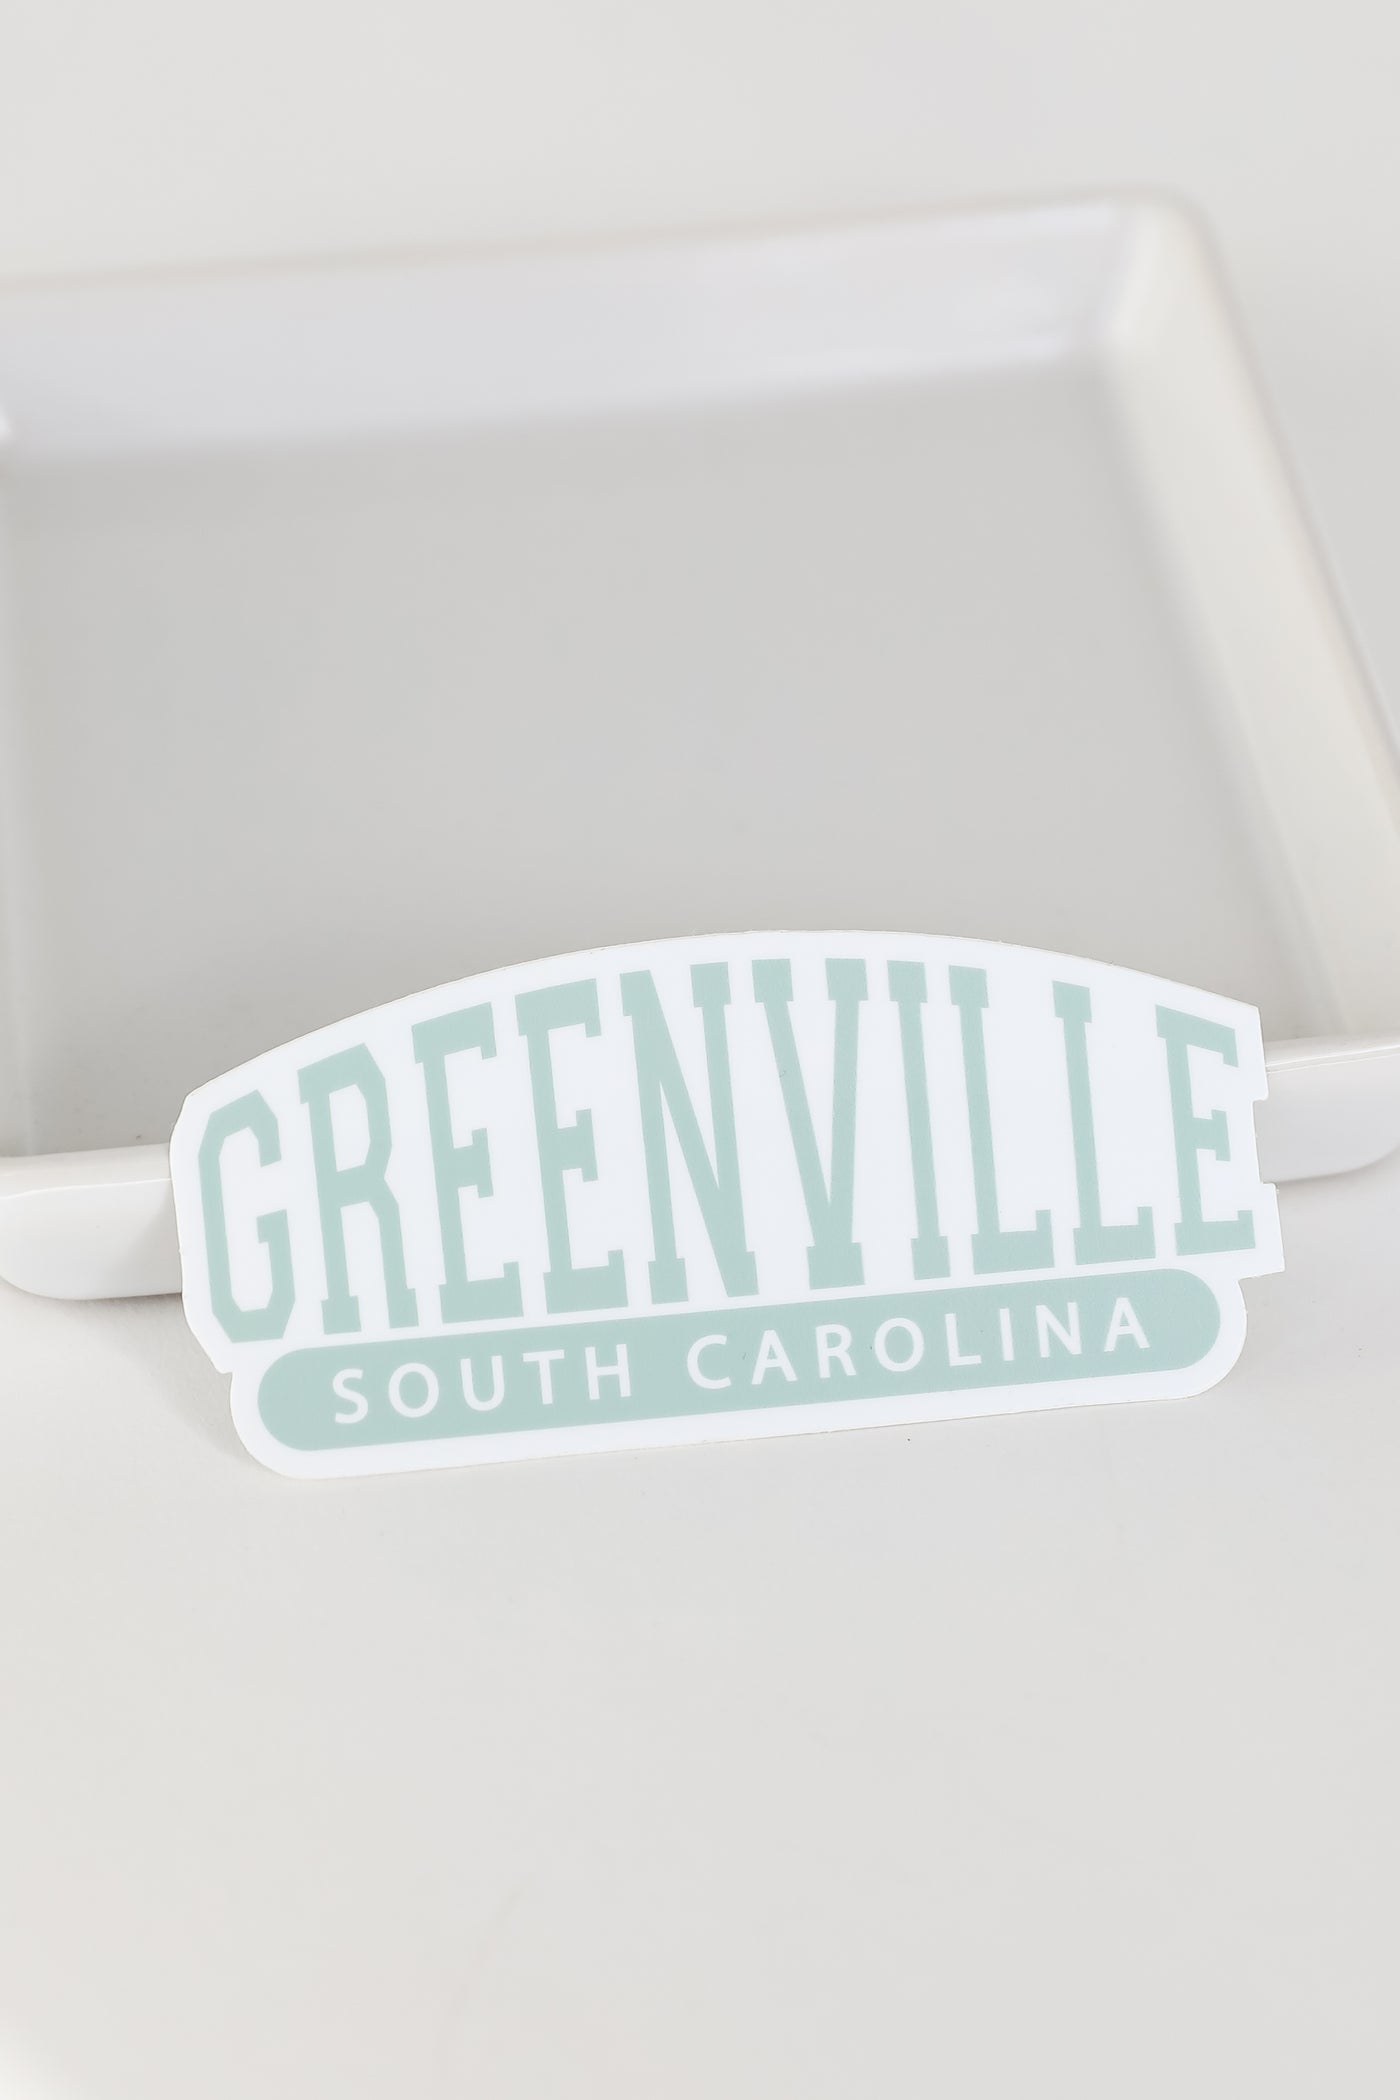 Mint Greenville South Carolina Sticker from dress up